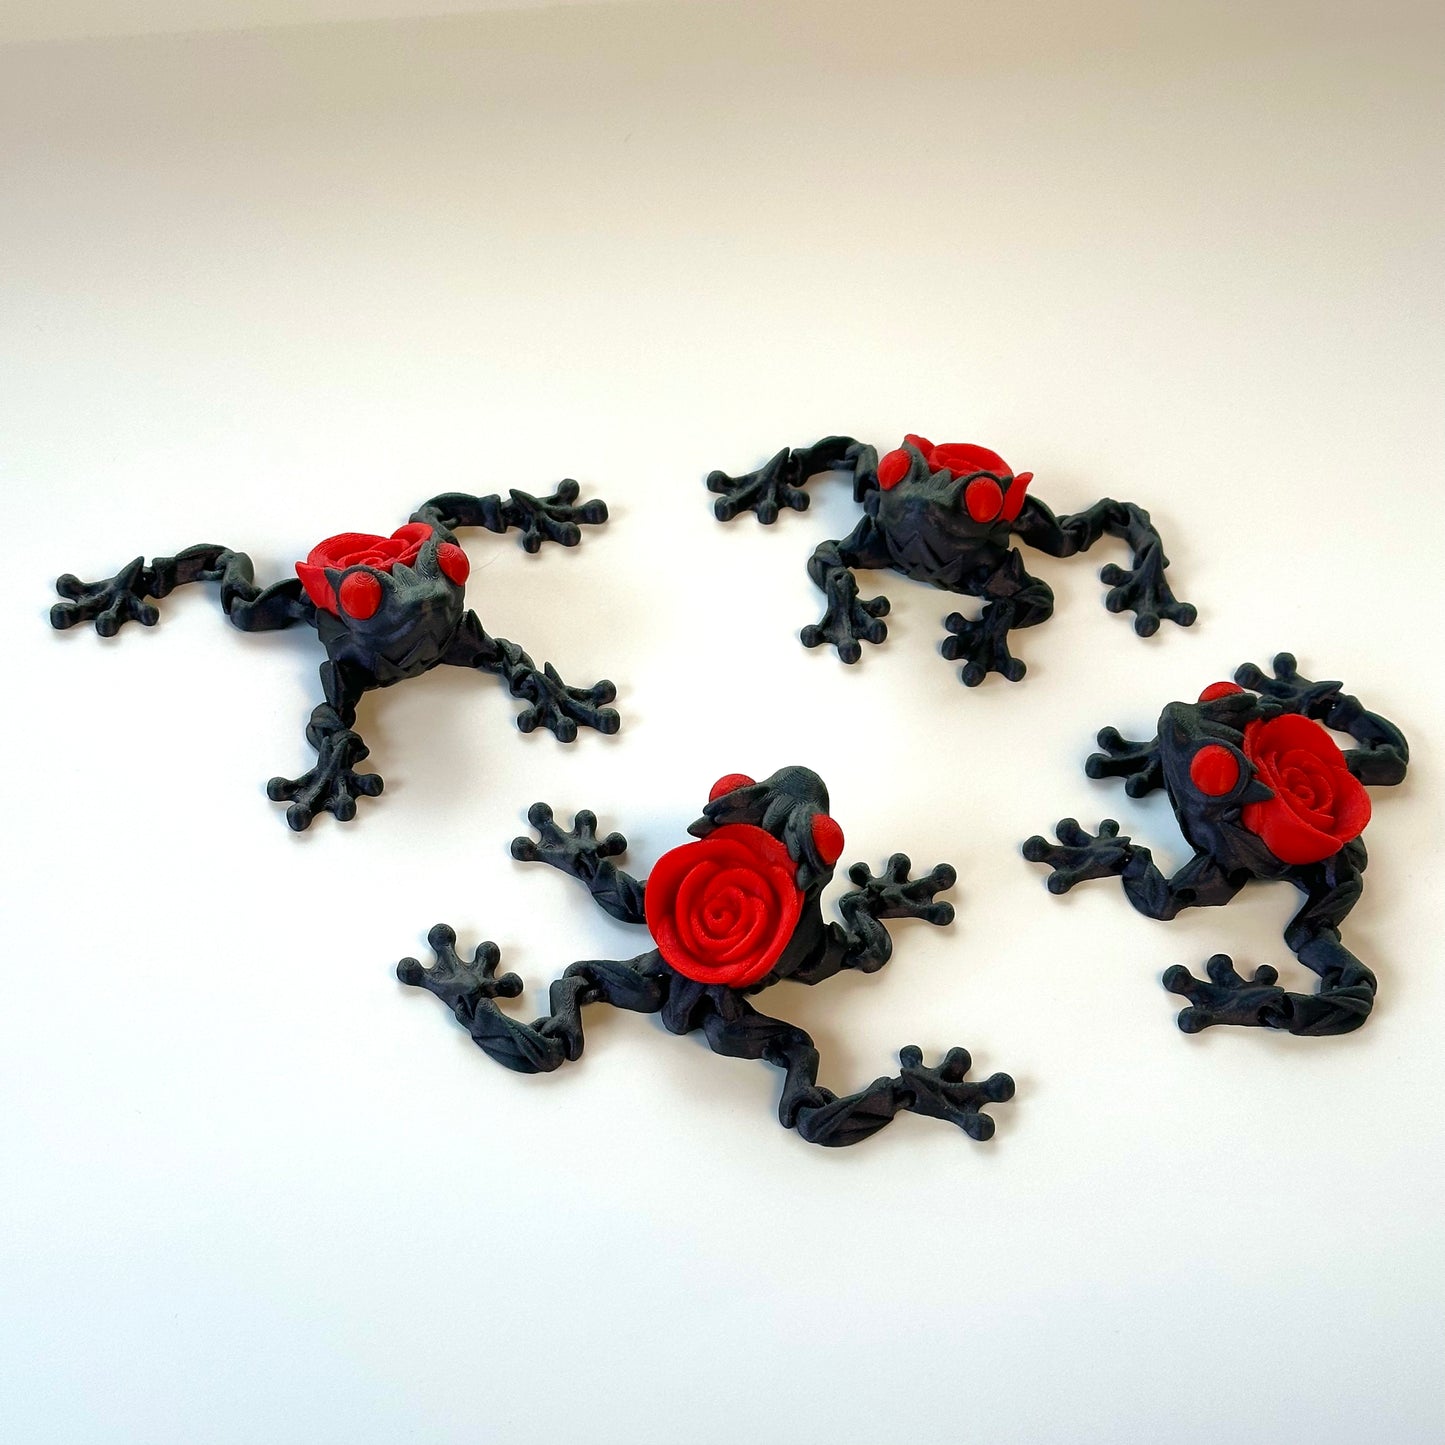 Rose Frog - Multi-Colored 3D Printed Articulating